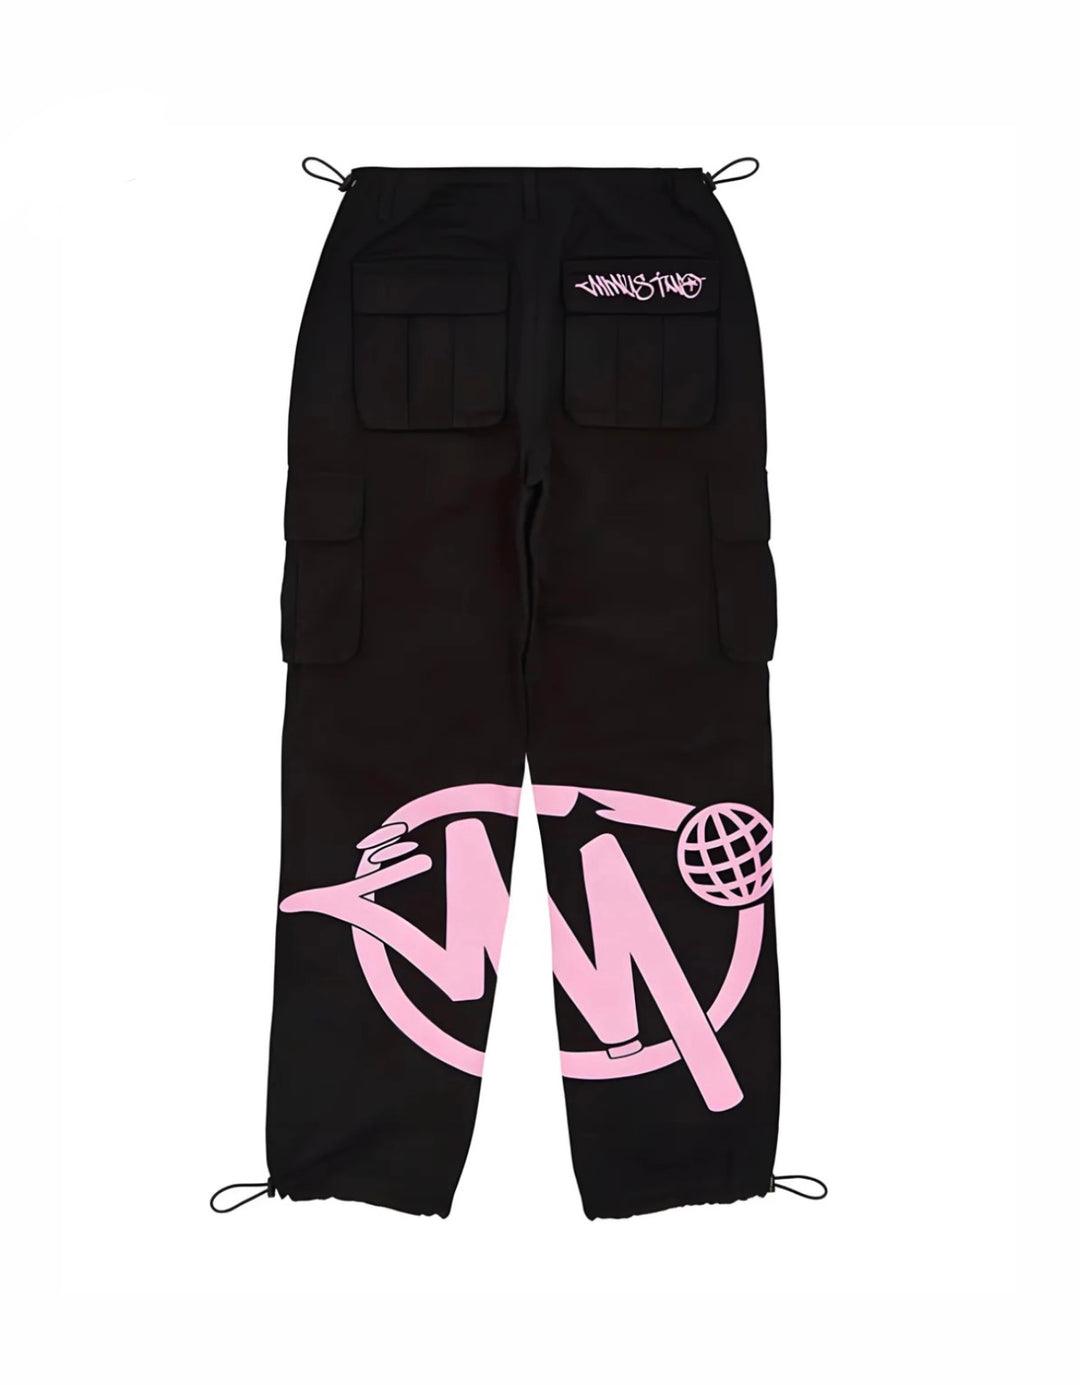 MINUS TWO Cargo Pants Pink - ワークパンツ/カーゴパンツ